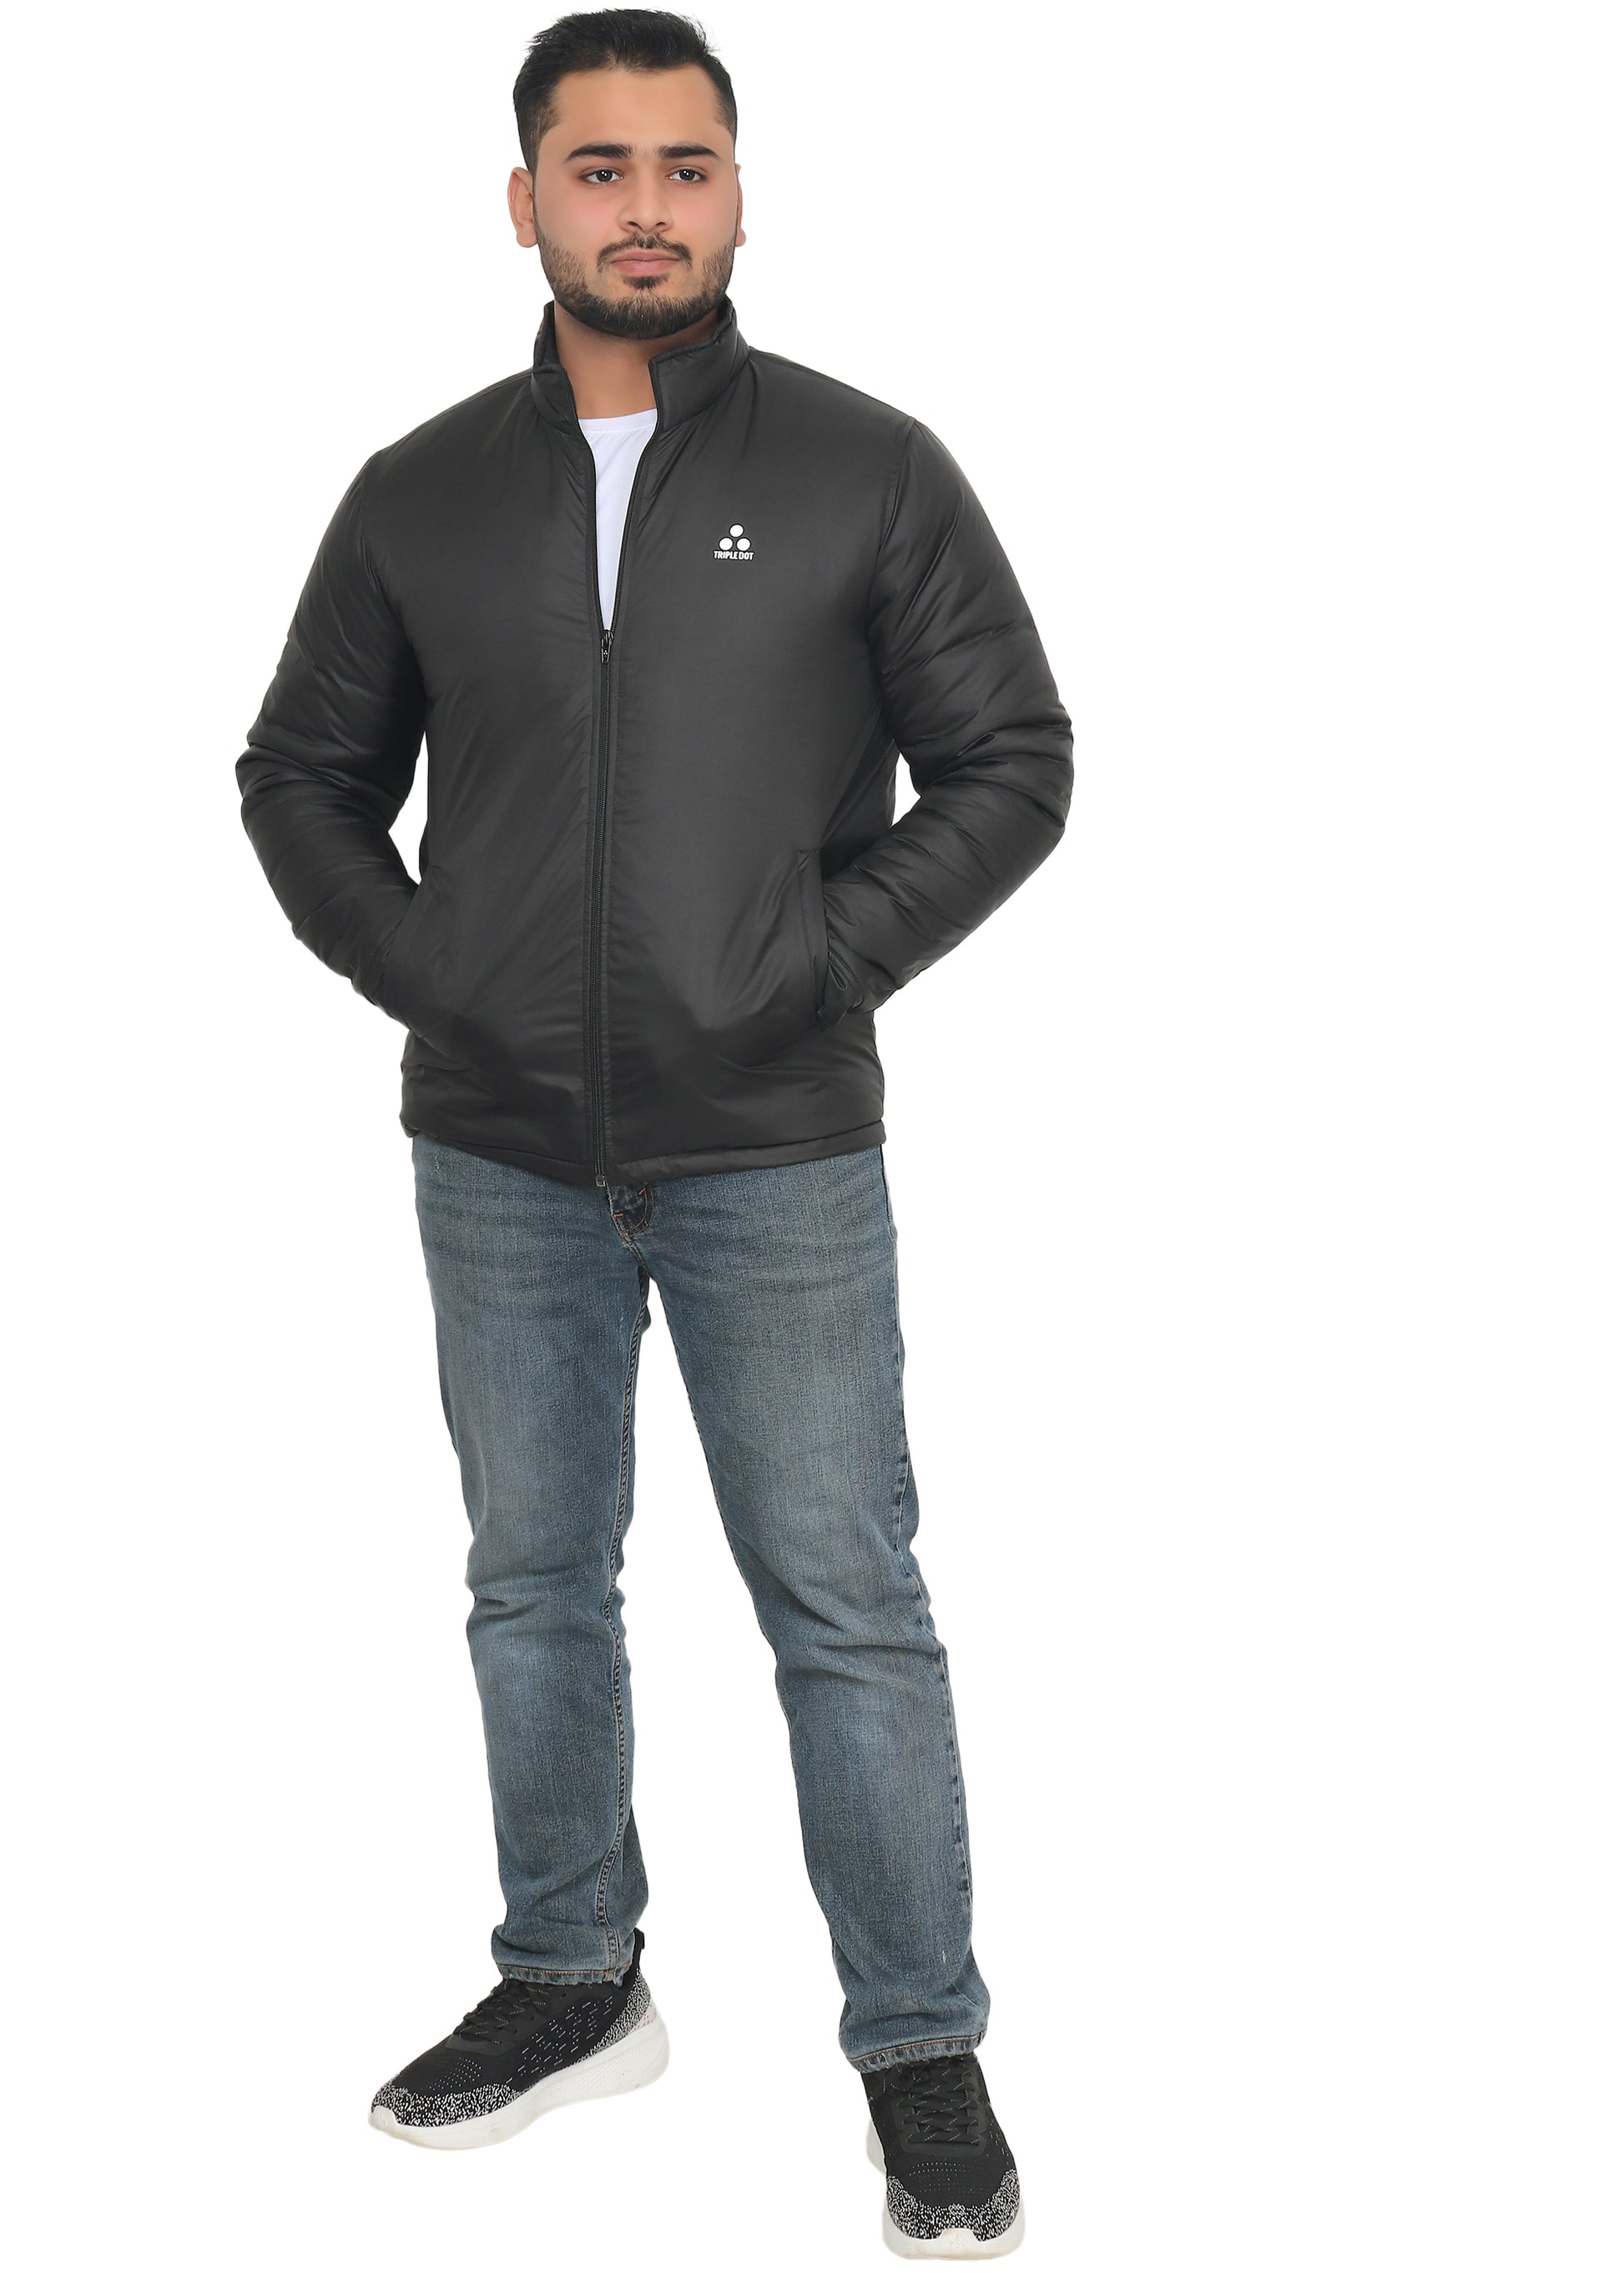 Triple Dot Solid Black Bomber Winter Jackets for Men's - Triple Dot Clothings